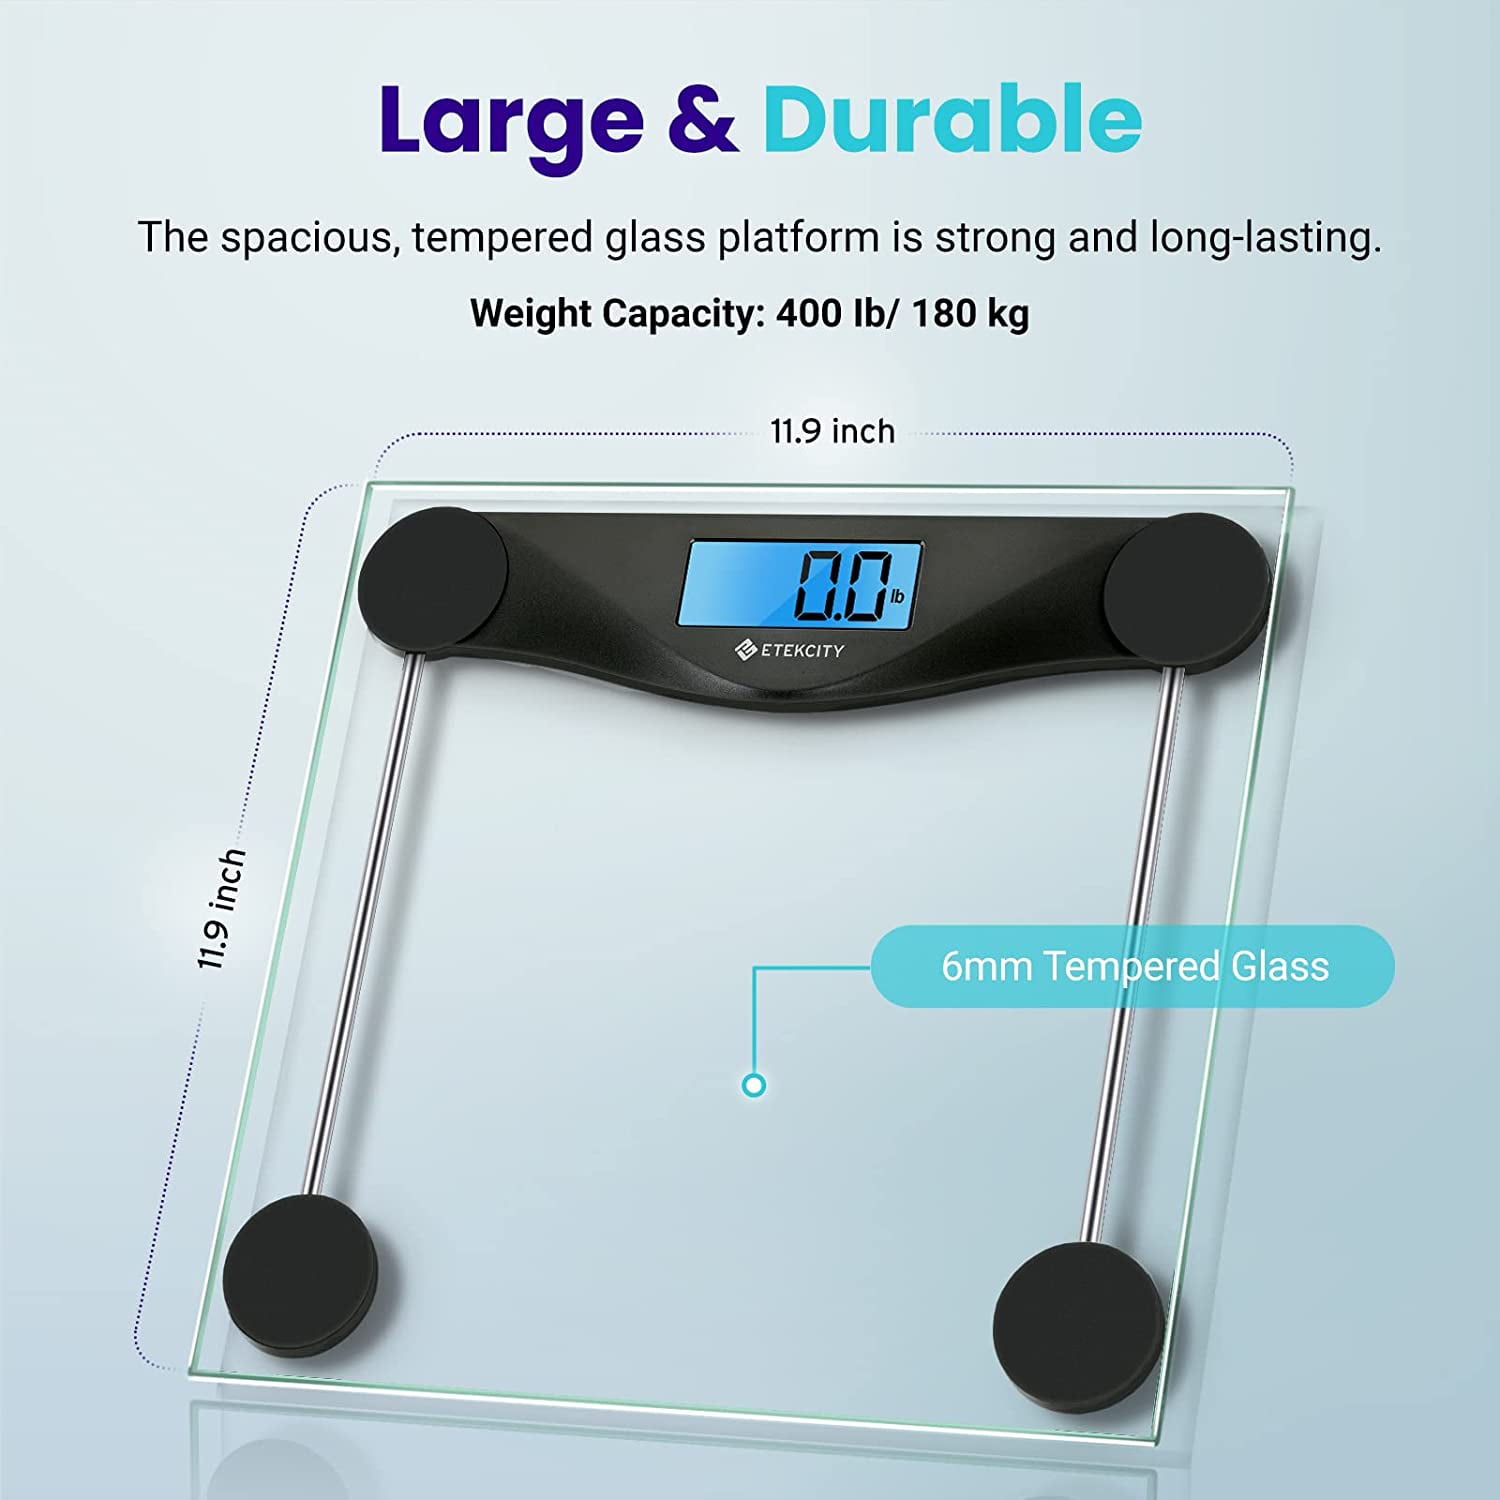 ETEKCITY Smart Body Weight Scale Esb4074c Bluetooth Vesync Nib New